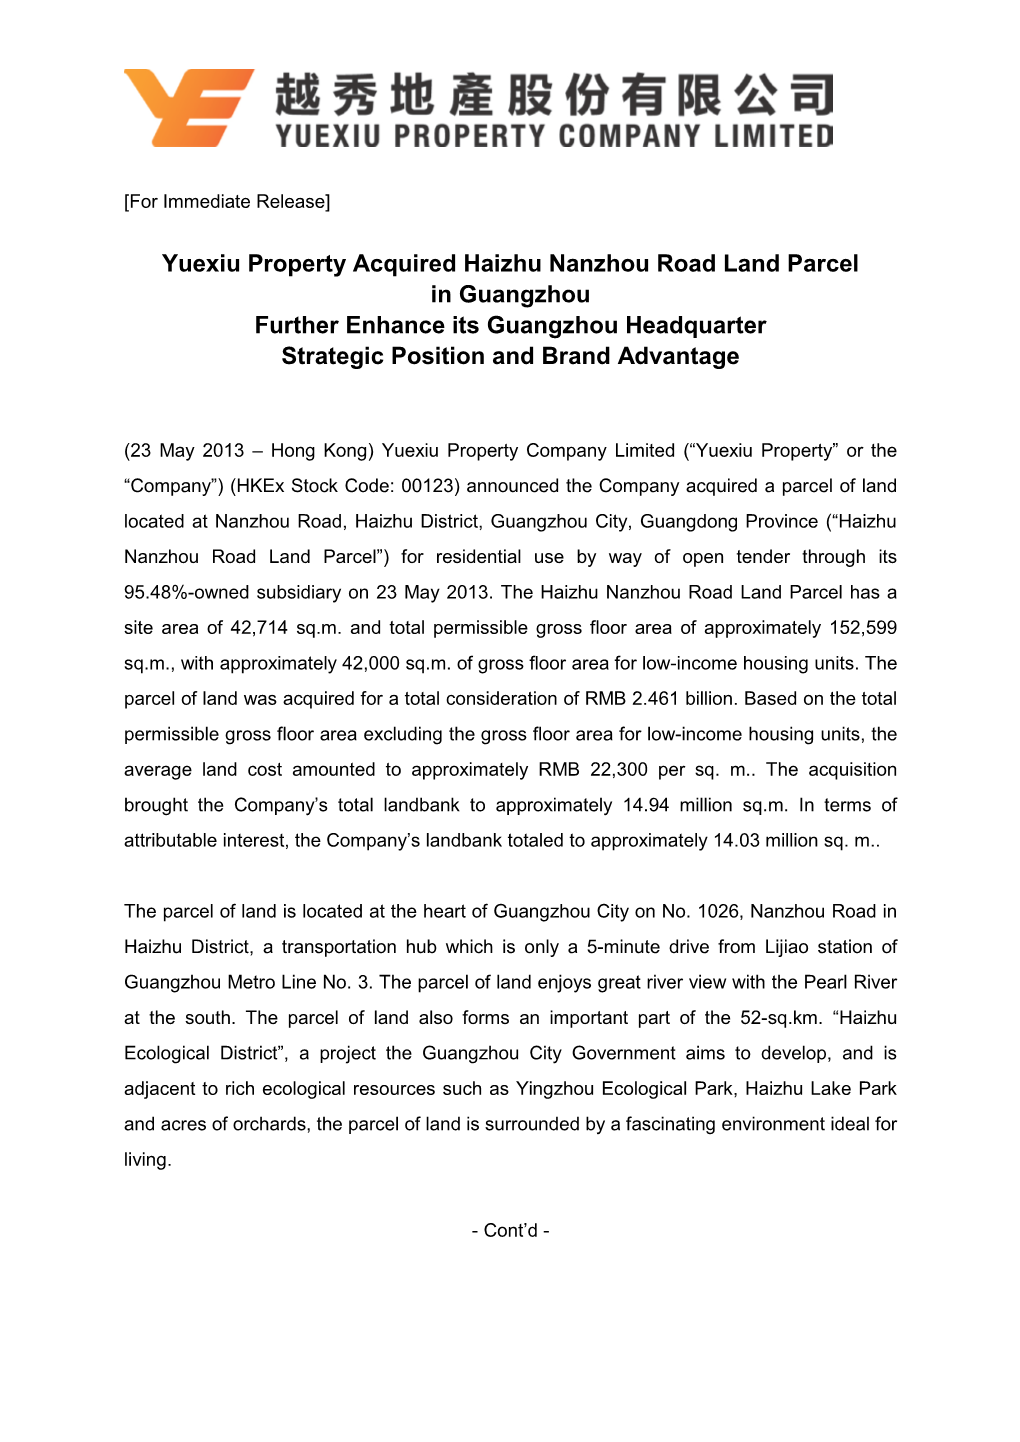 Yuexiu Property Acquired Haizhu Nanzhou Road Land Parcel in Guangzhou Further Enhance Its Guangzhou Headquarter Strategic Position and Brand Advantage